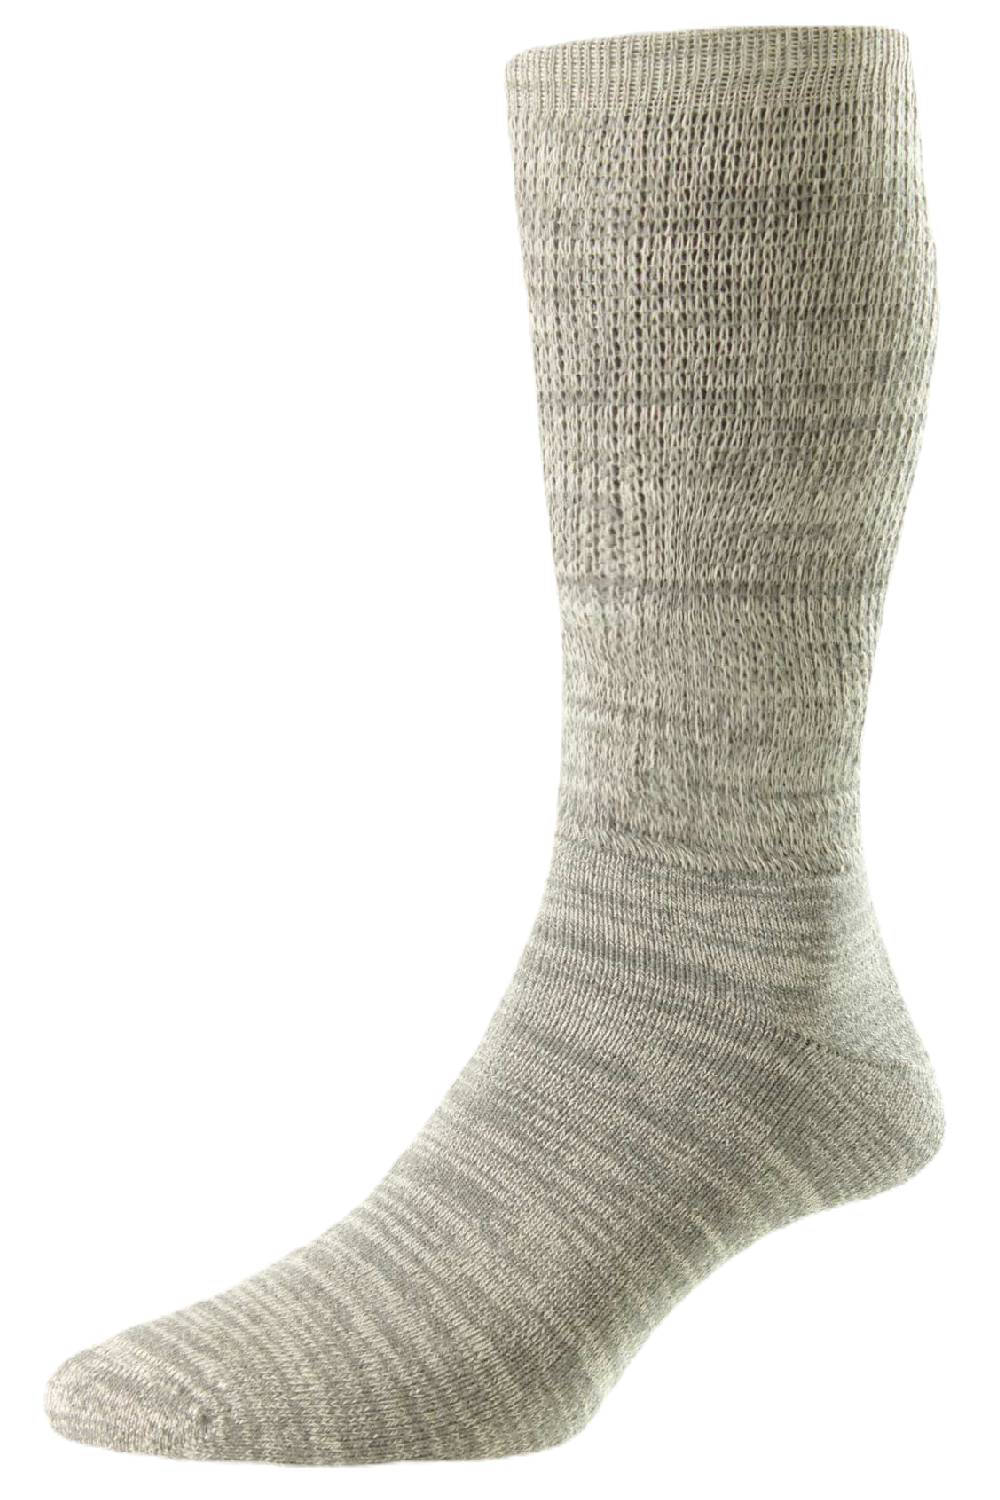 HJ Hall Lightweight Diabetic Cotton Socks in Mid Grey/Silver 